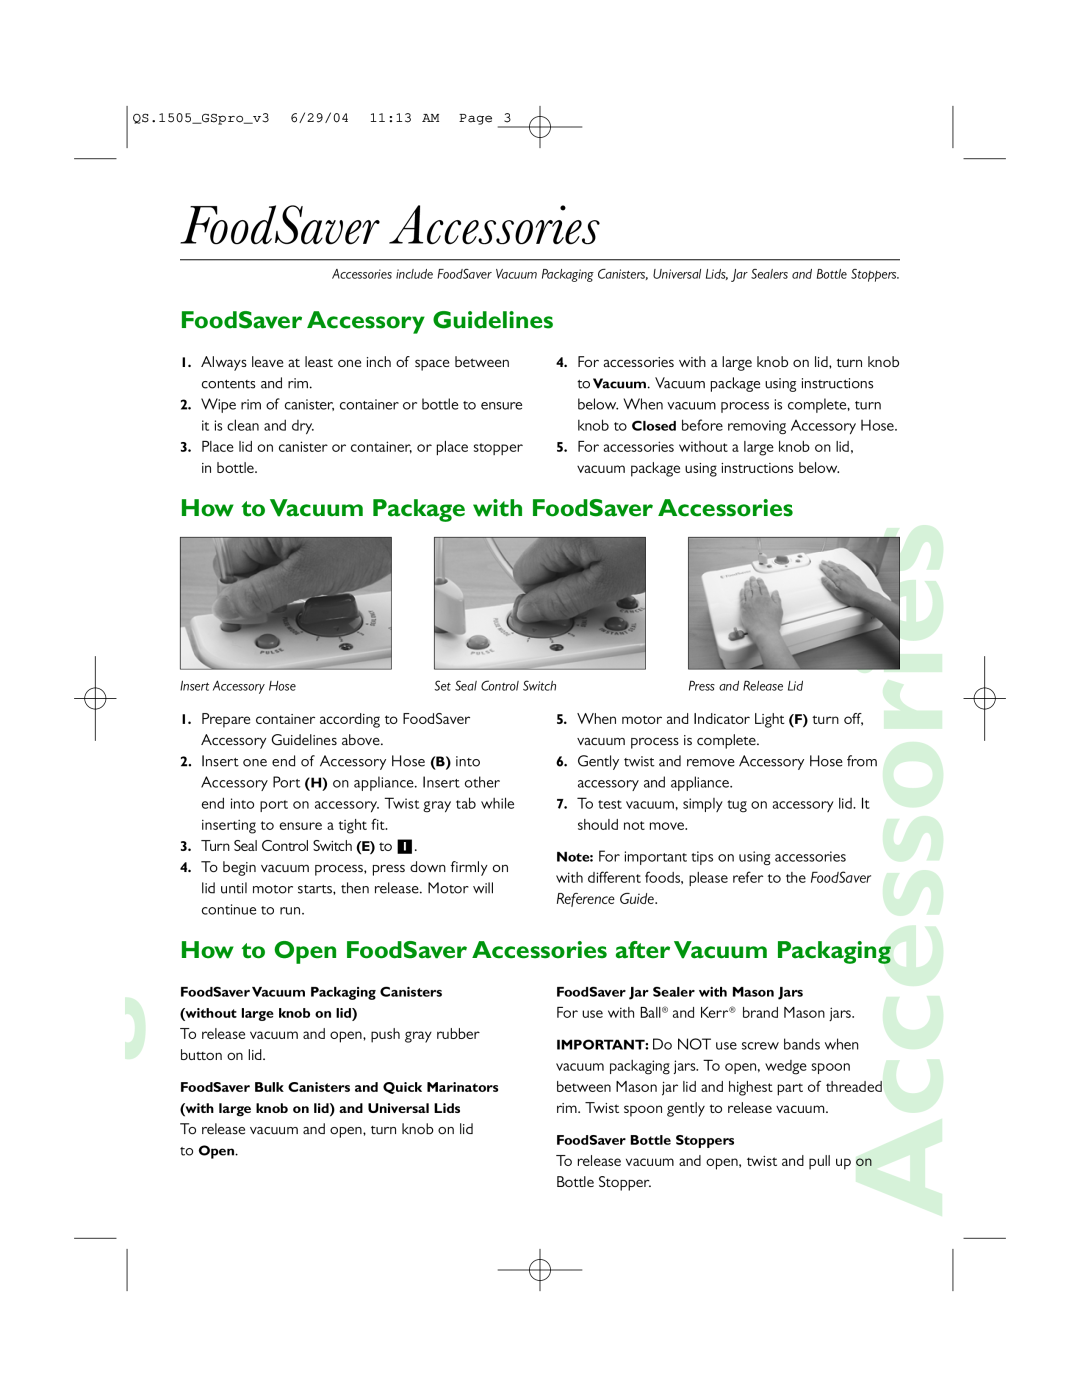 FoodSaver V1505, GameSaver Pro quick start FoodSaver Accessories, FoodSaver Accessory Guidelines 